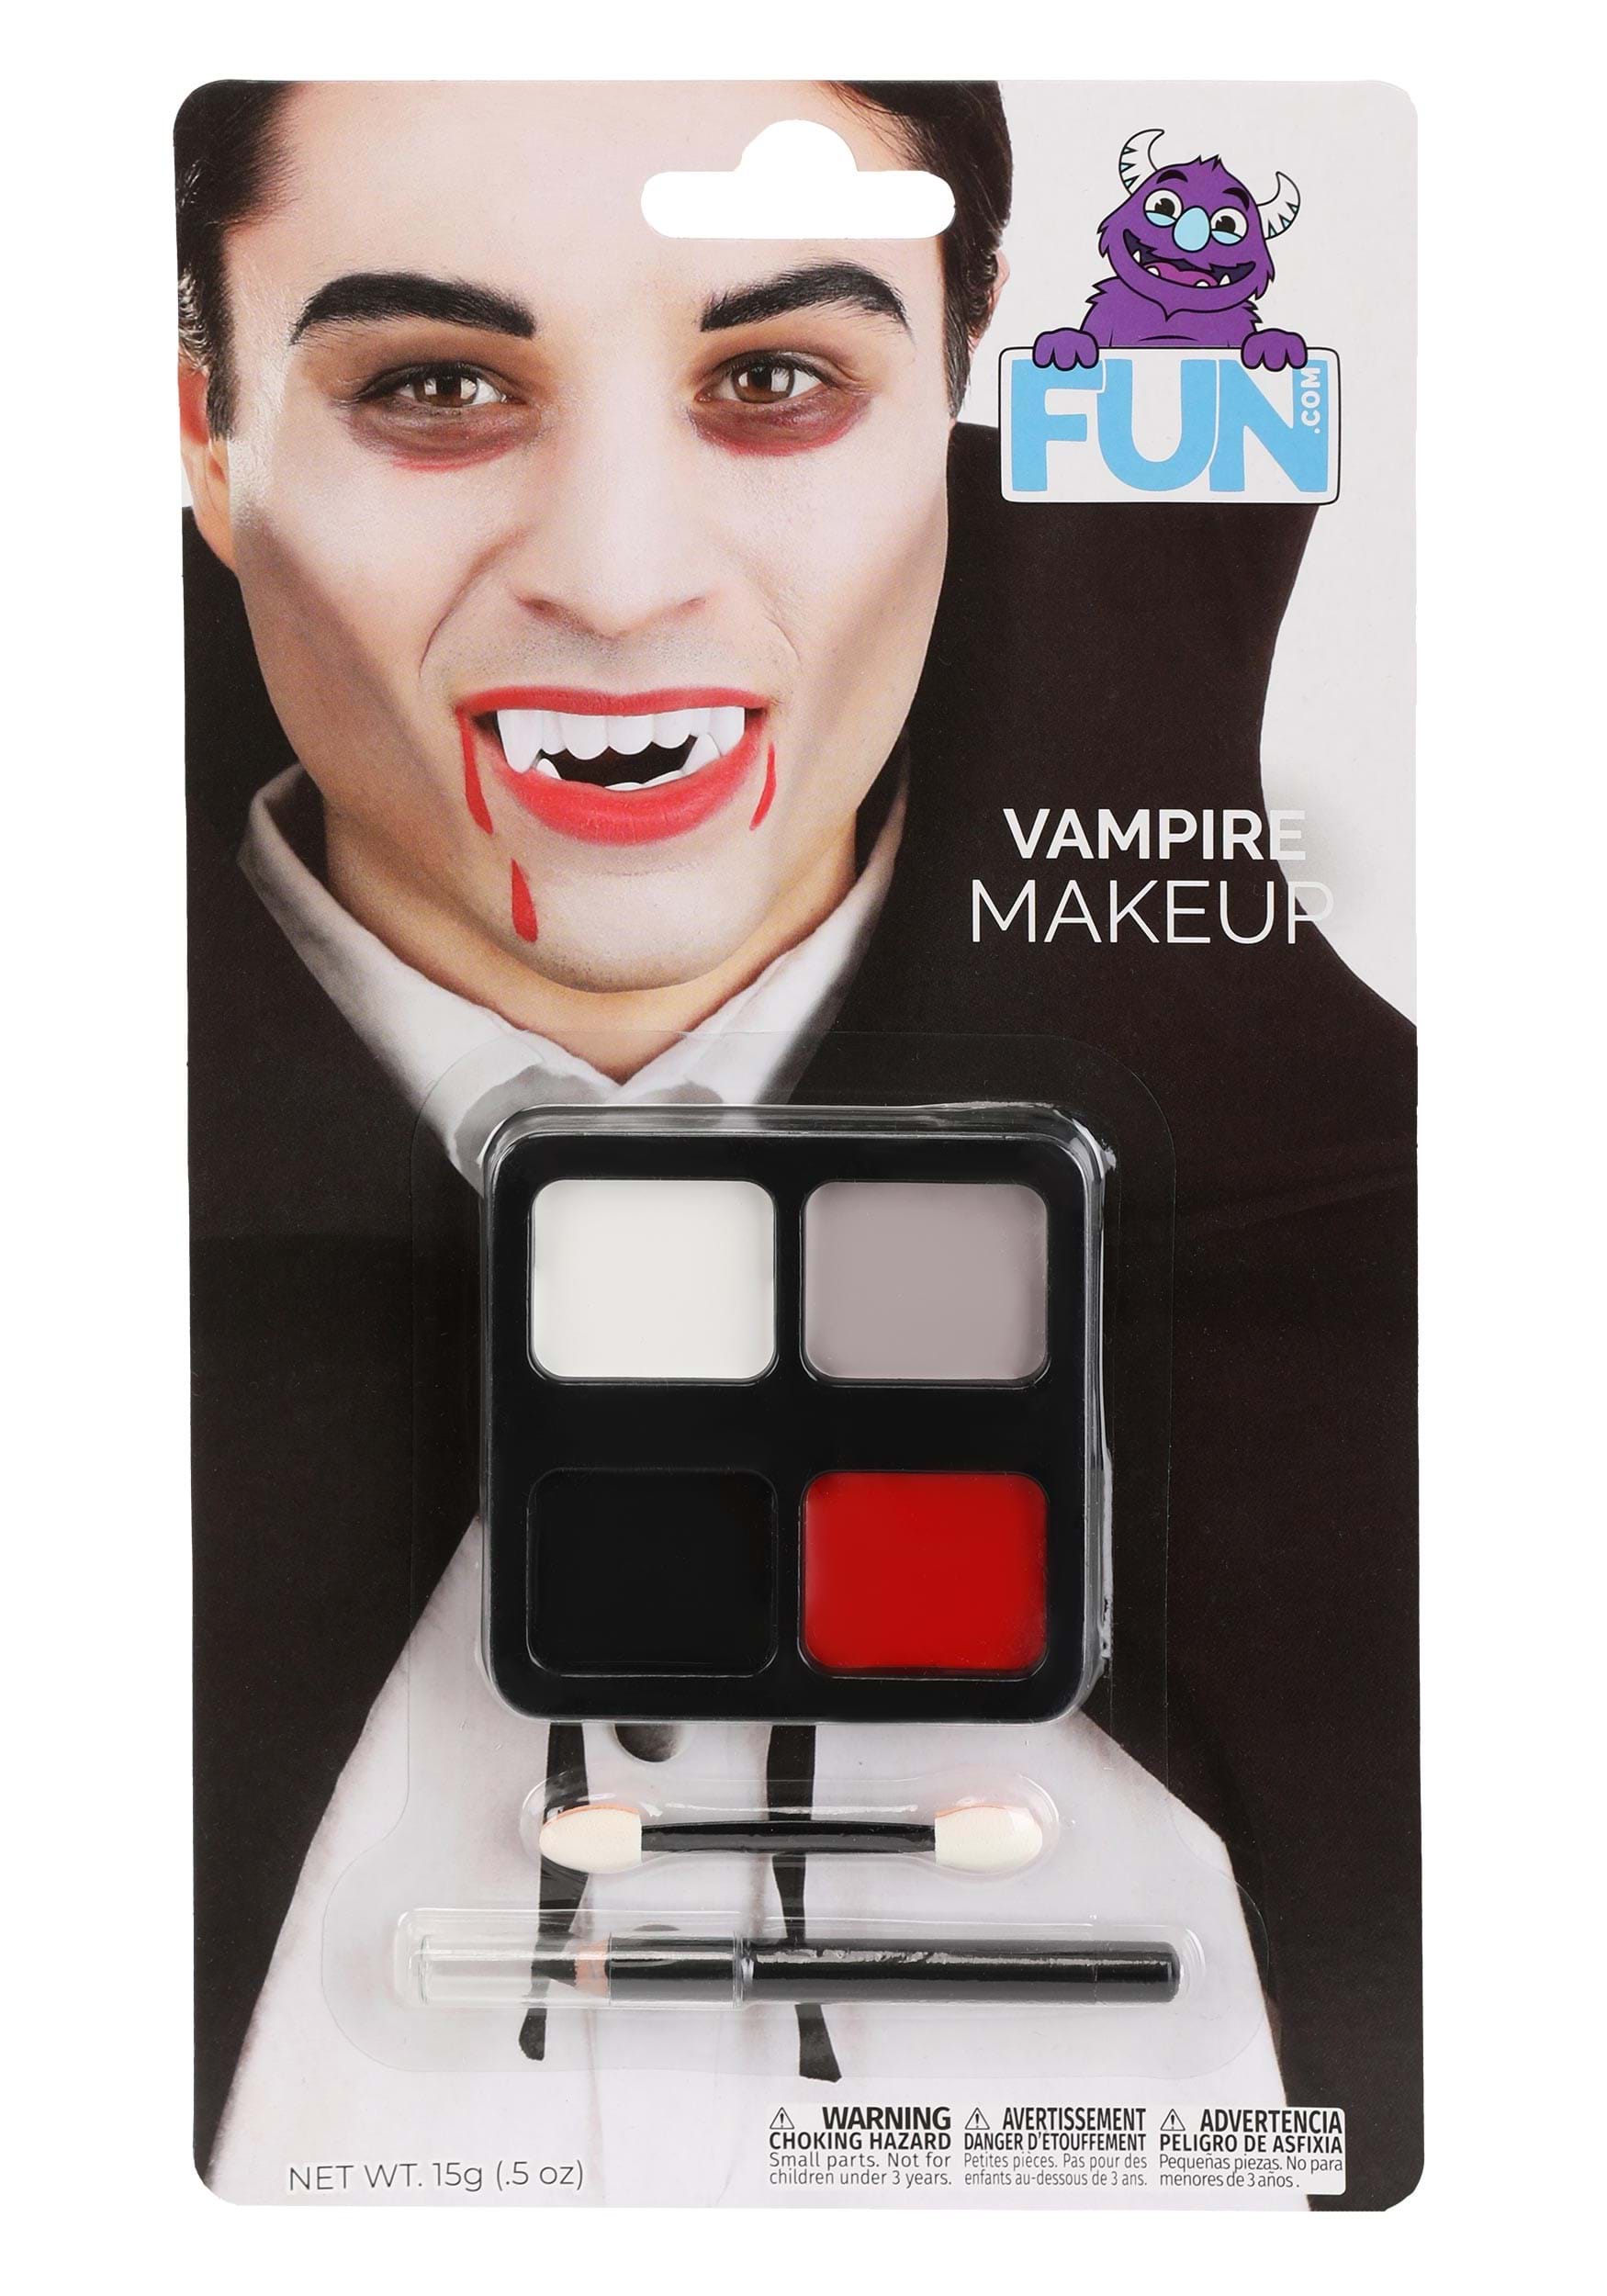 Adult Makeup Palette Halloween Kit, $12.99